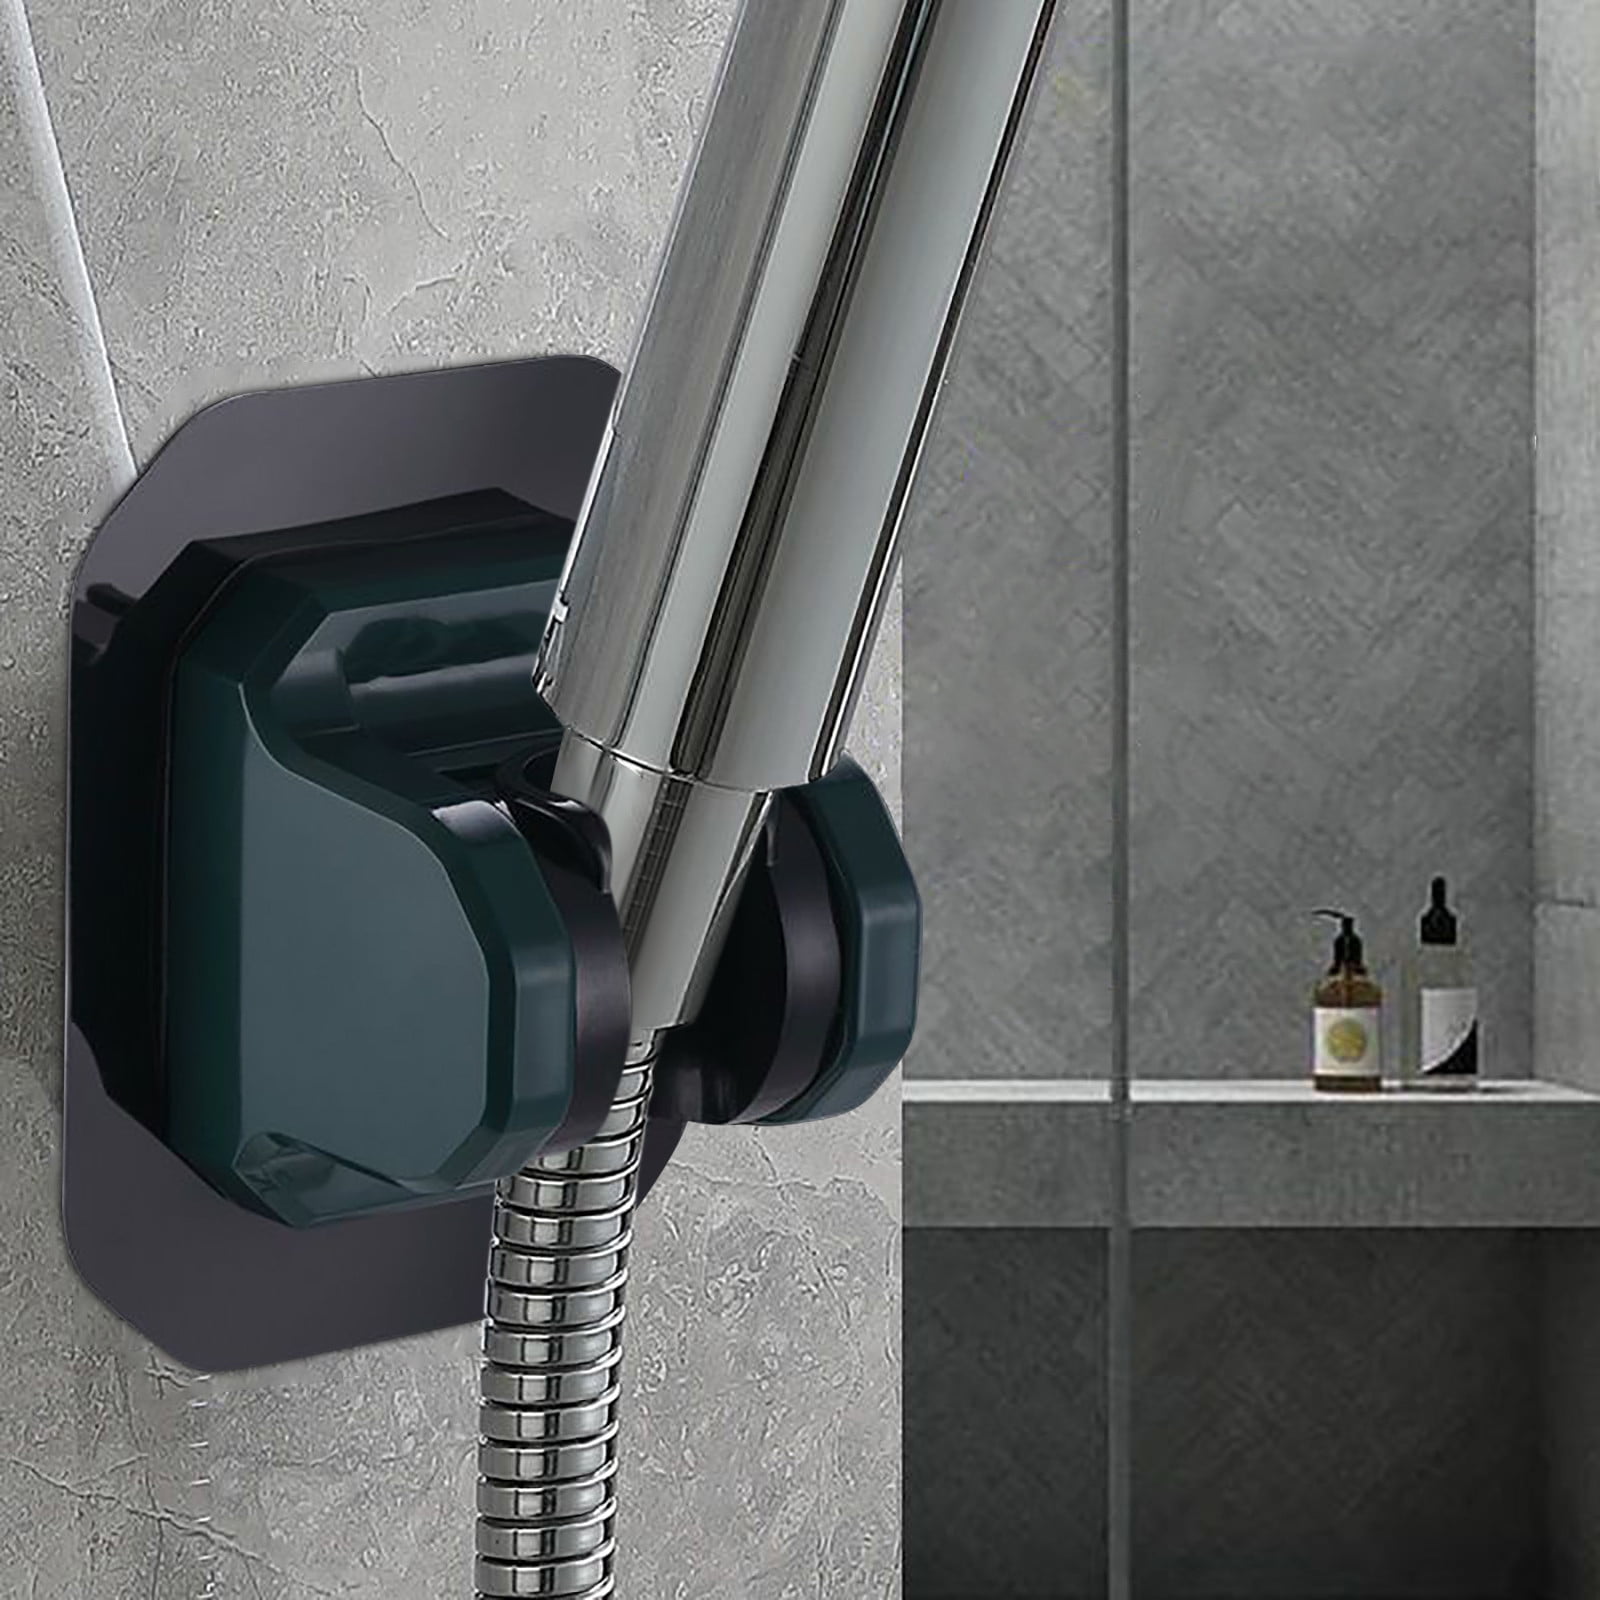 Dtydtpe Command Hook Holder for Shower Wall Adhesive Hooks for Hanging 2 Pack Bathroom Silicone Waterproof Decorative Shower Hooks Hair Brush Holder